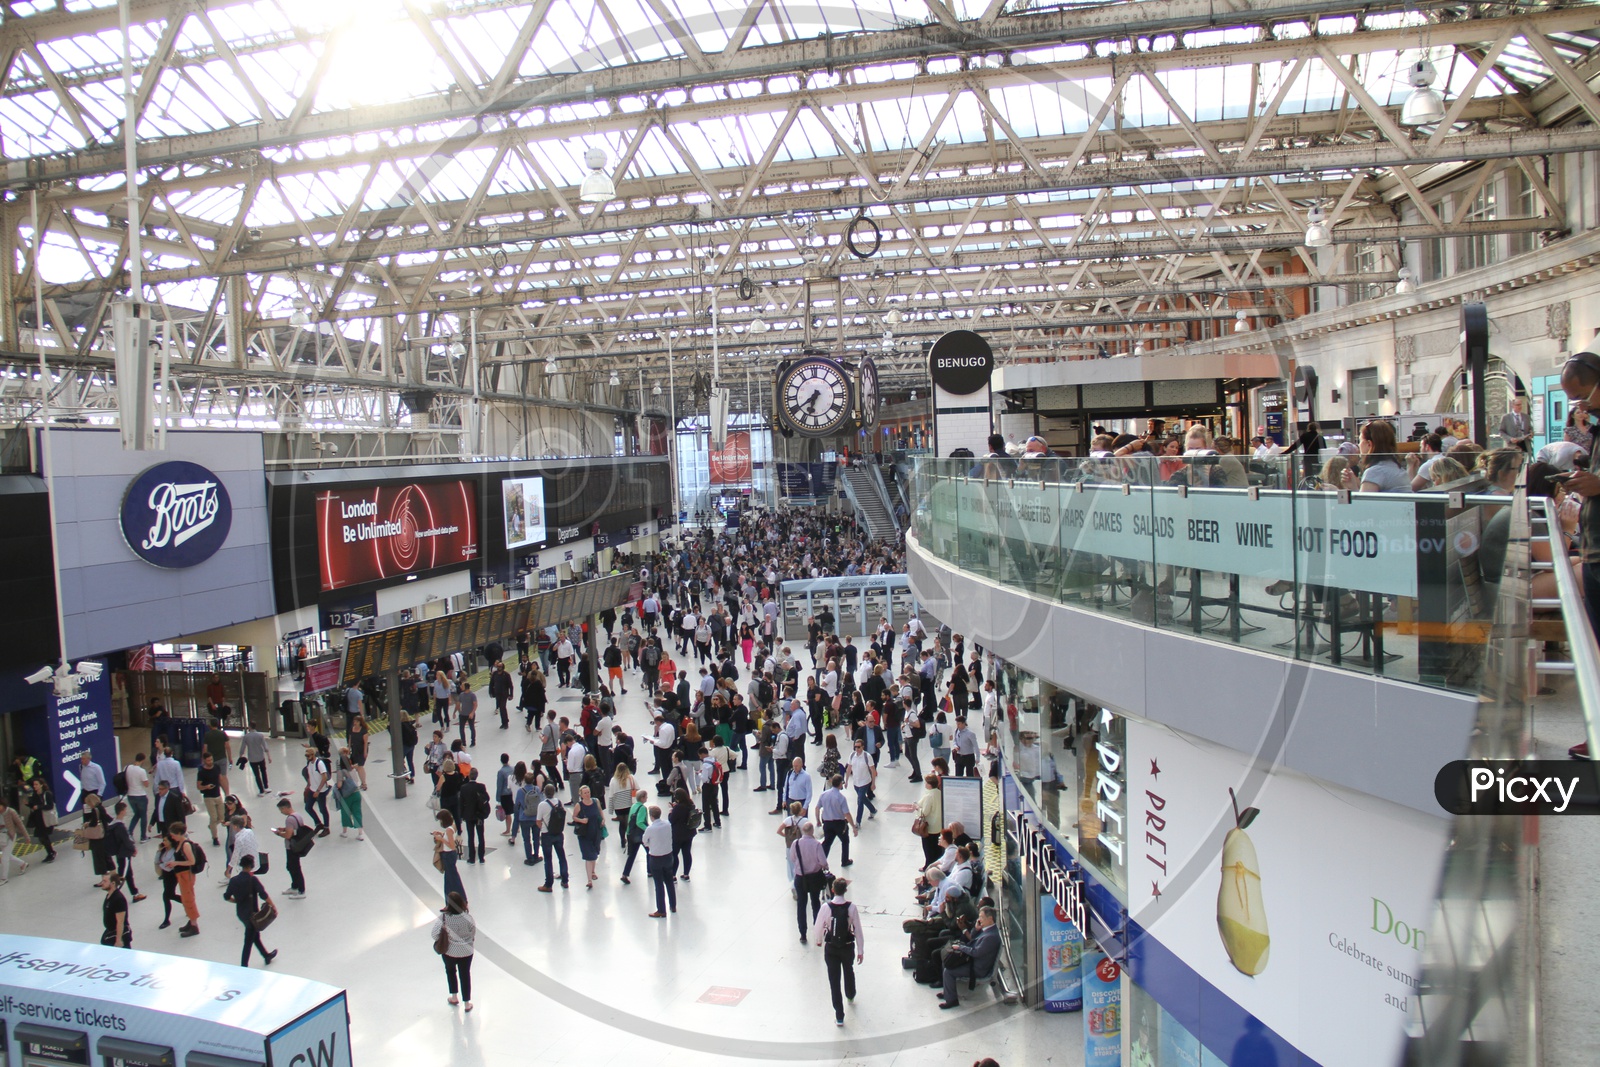 Interiors of Waterloo Railway Station with People walking